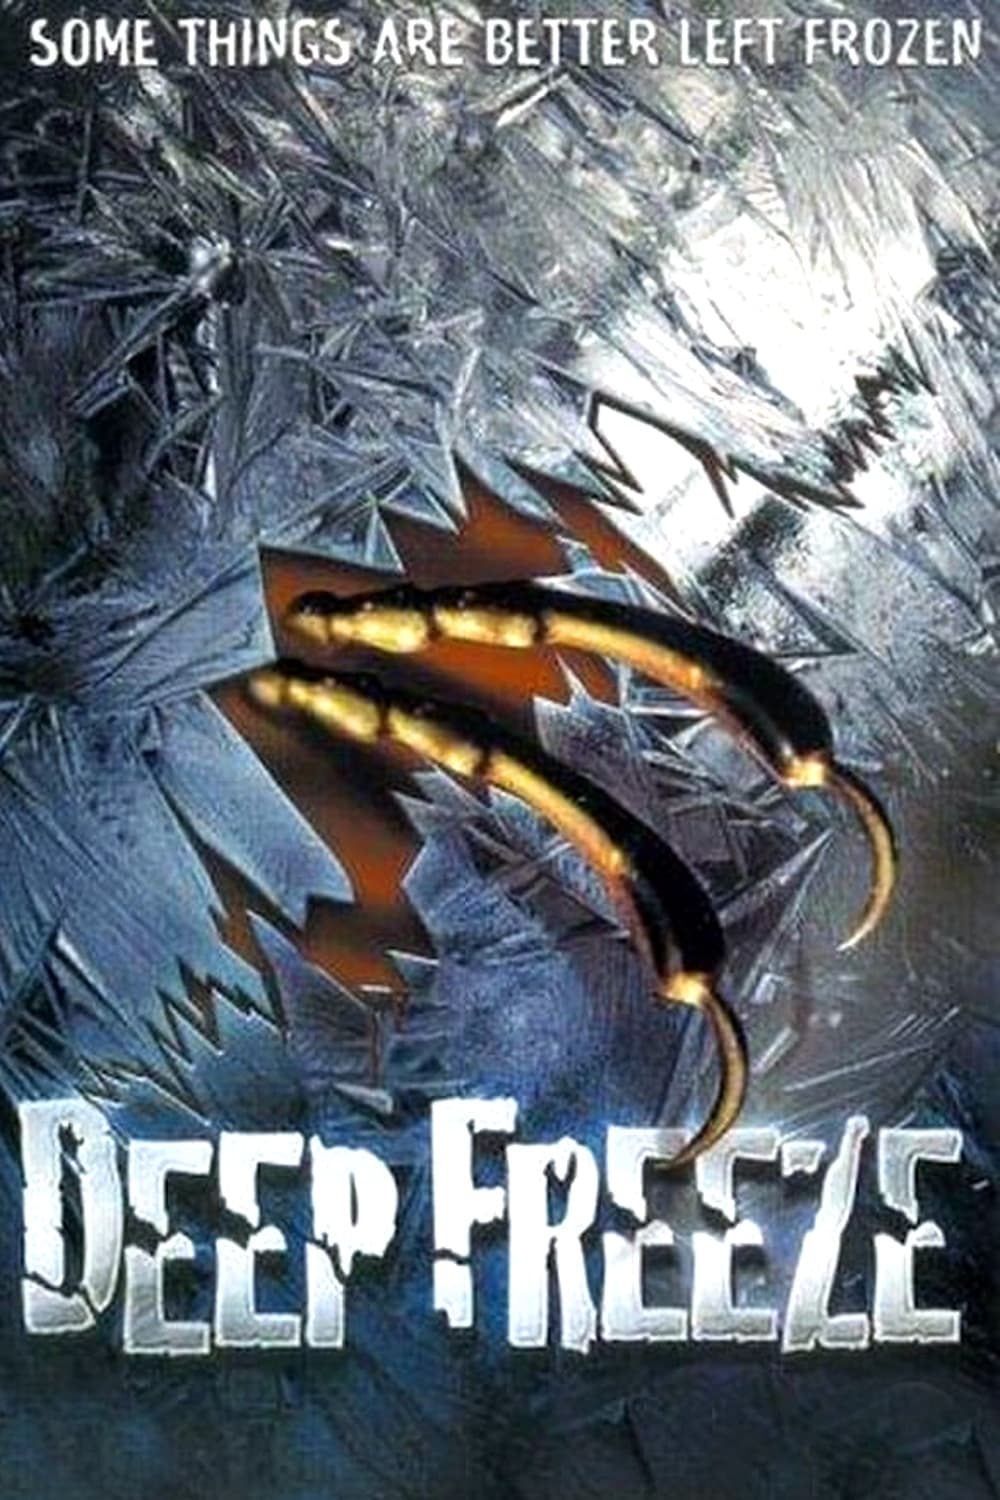 Deep Freeze (2002)